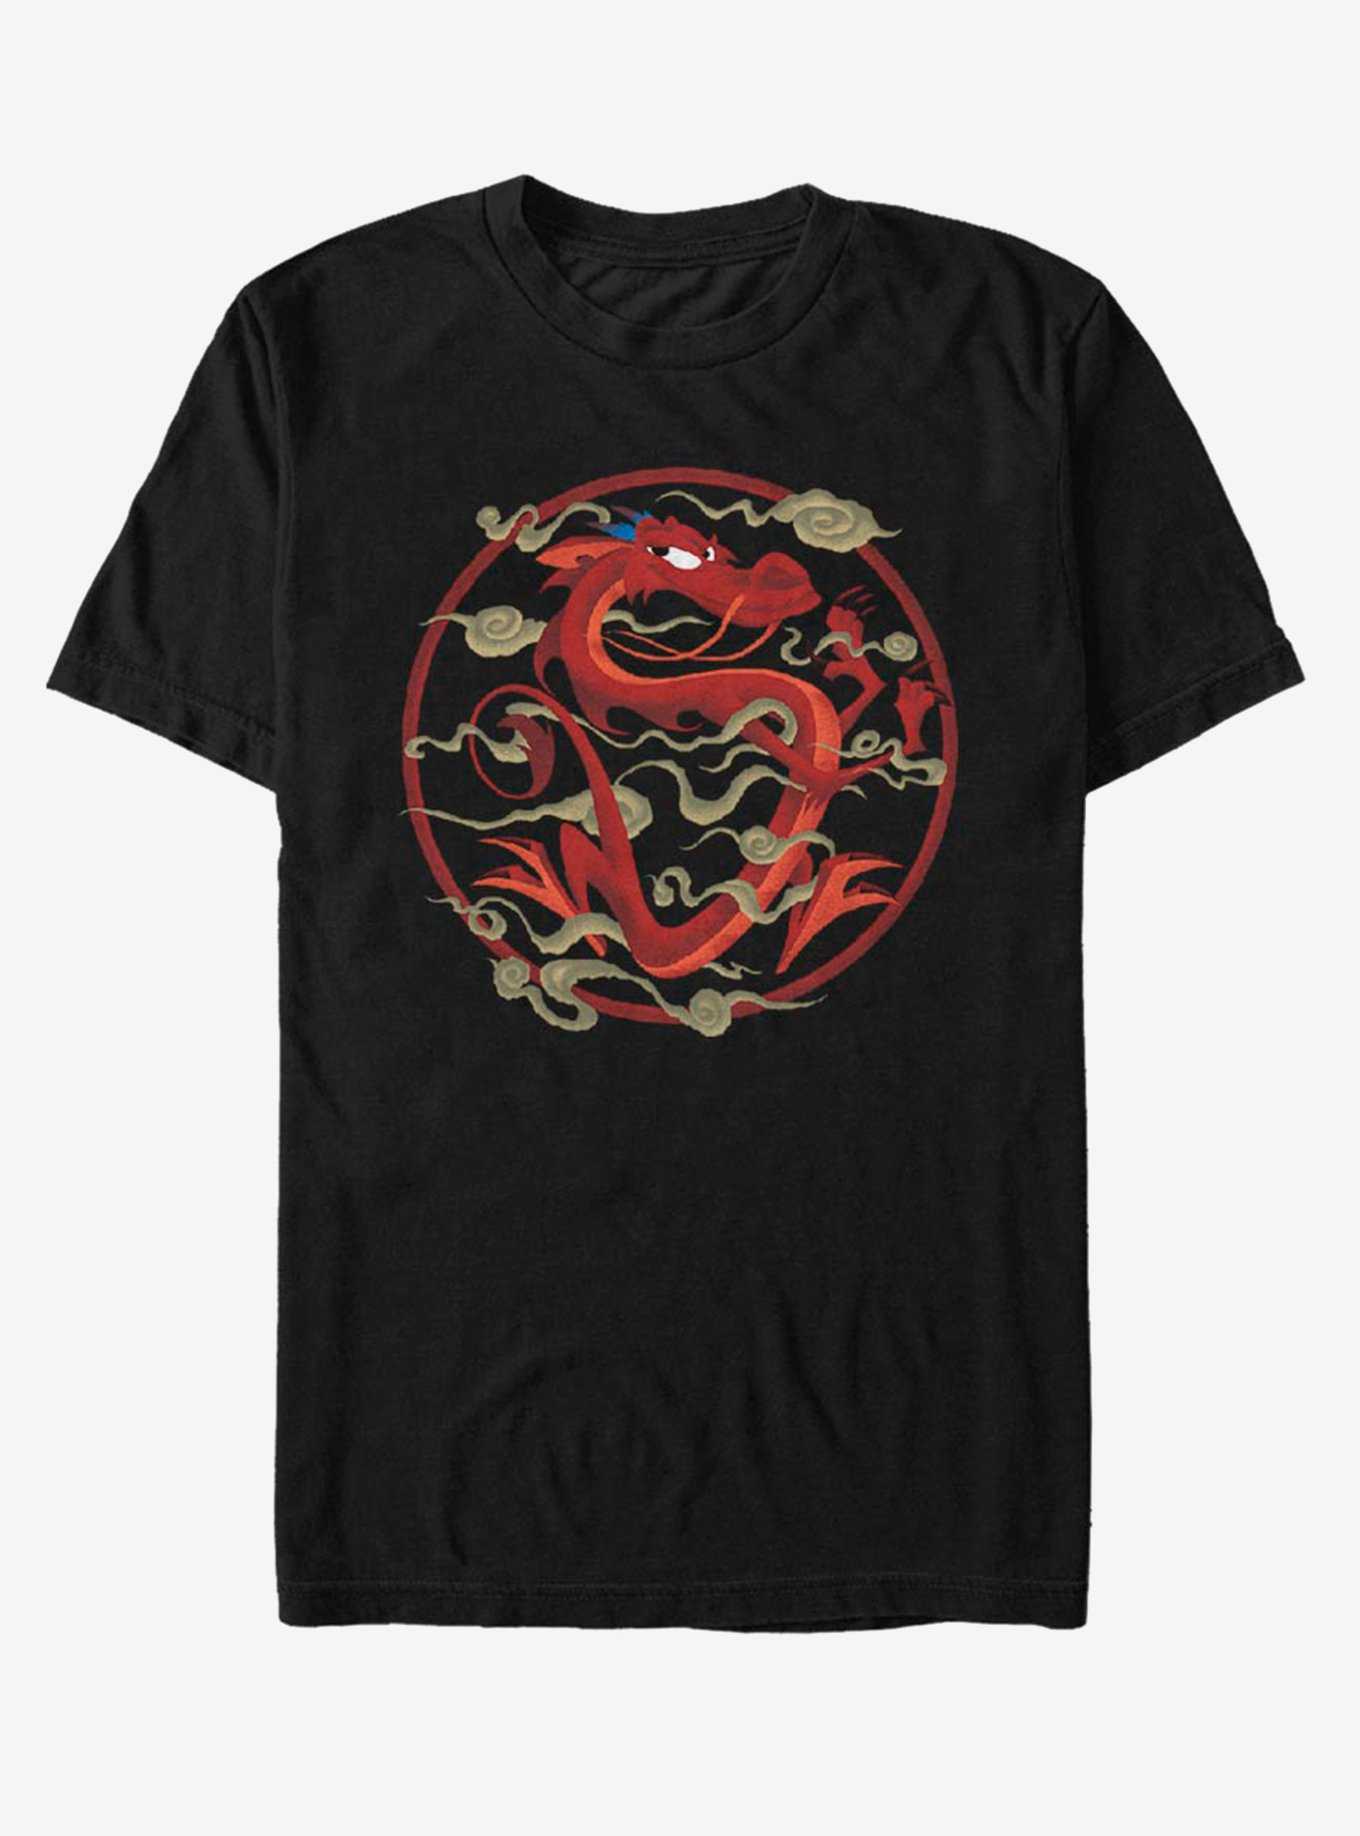 Disney Mulan Mushu Emblem T-Shirt, , hi-res